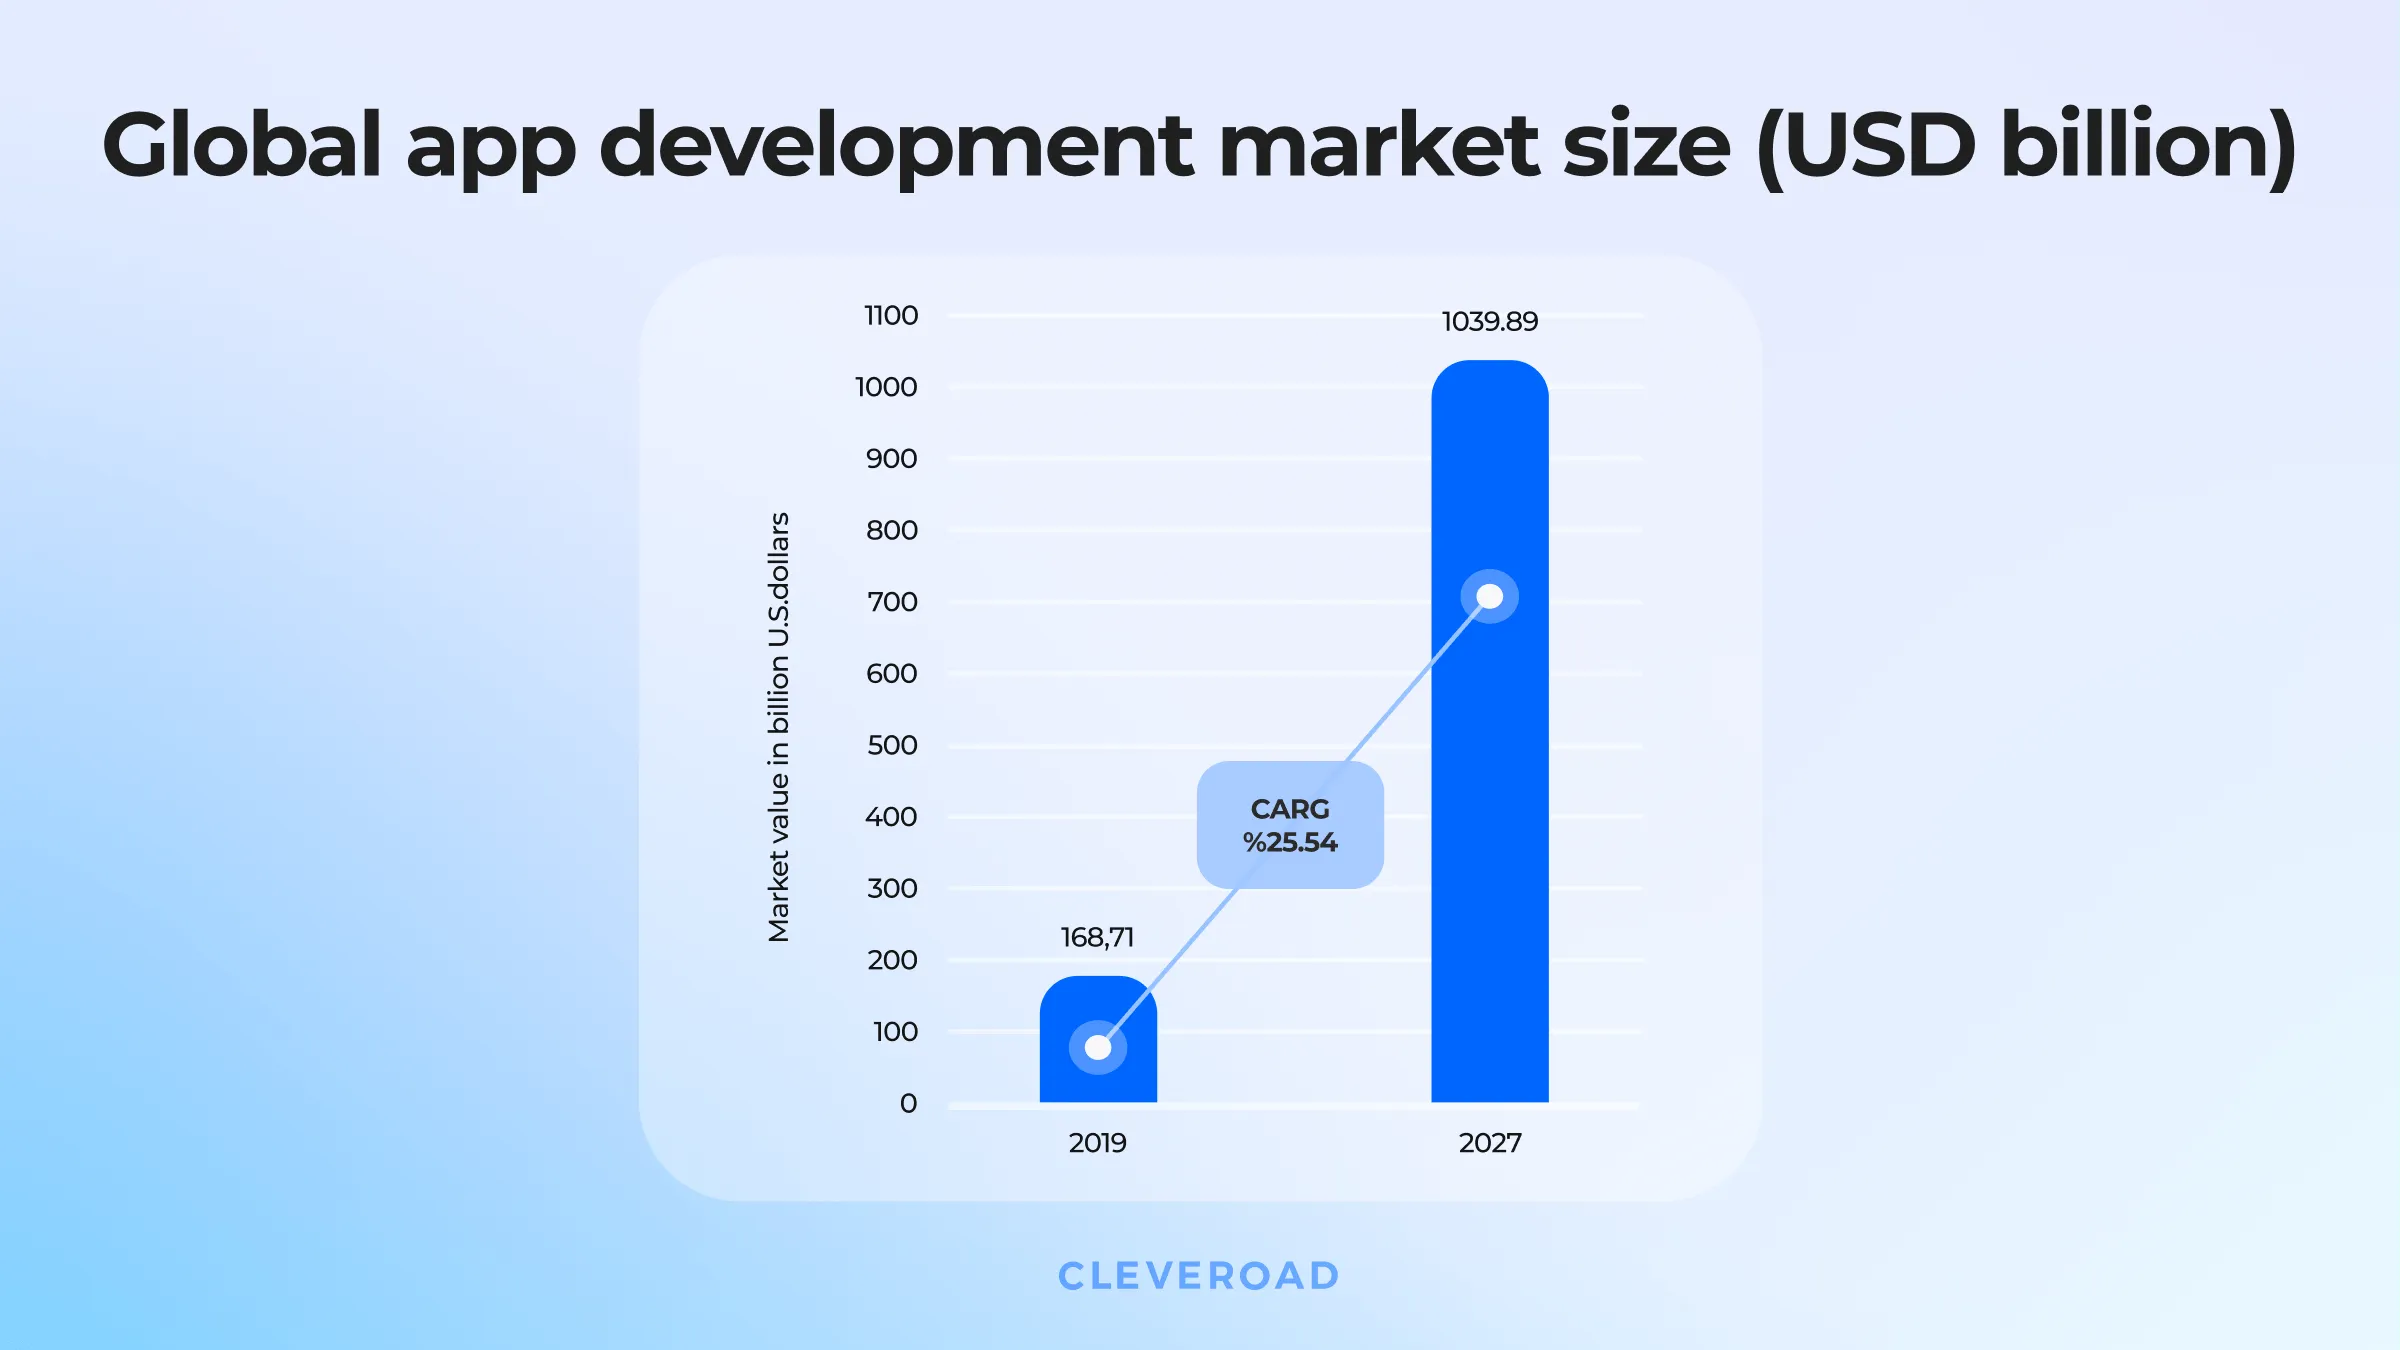 Global app development market size predictions